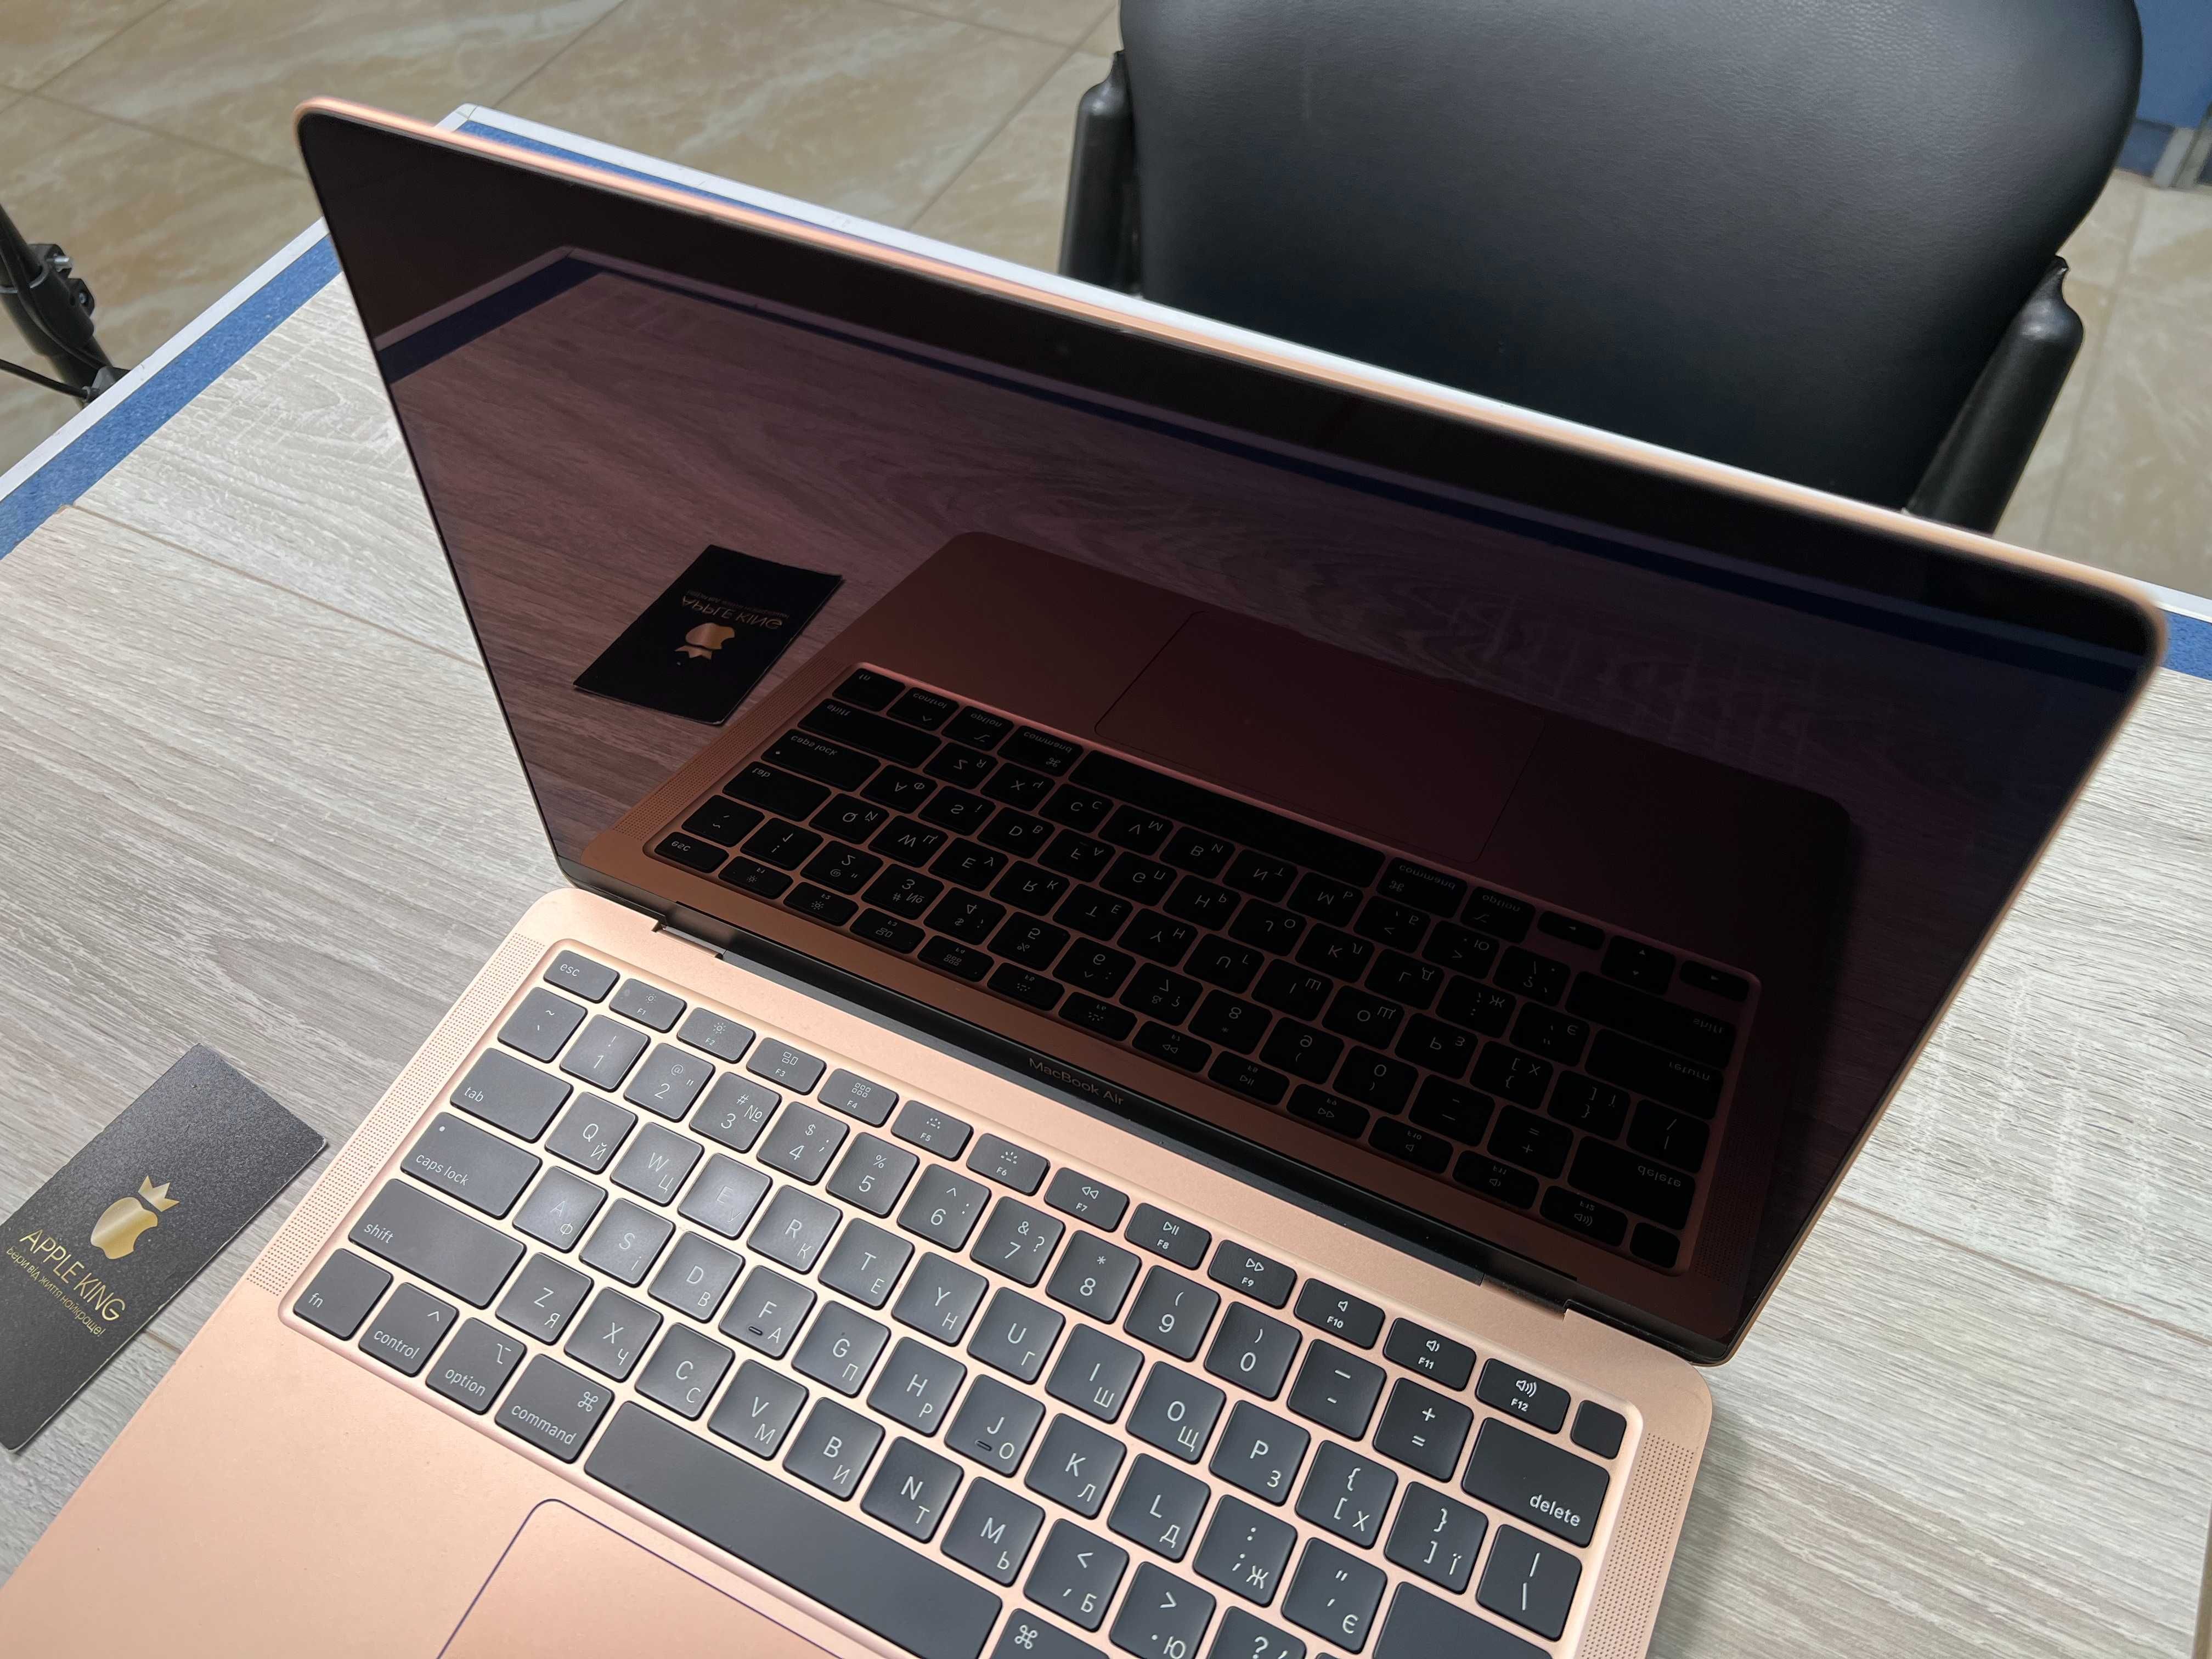 Ноутбук MacBook Air 13" 2020 Gold i3 8gb 256gb ssd A2179